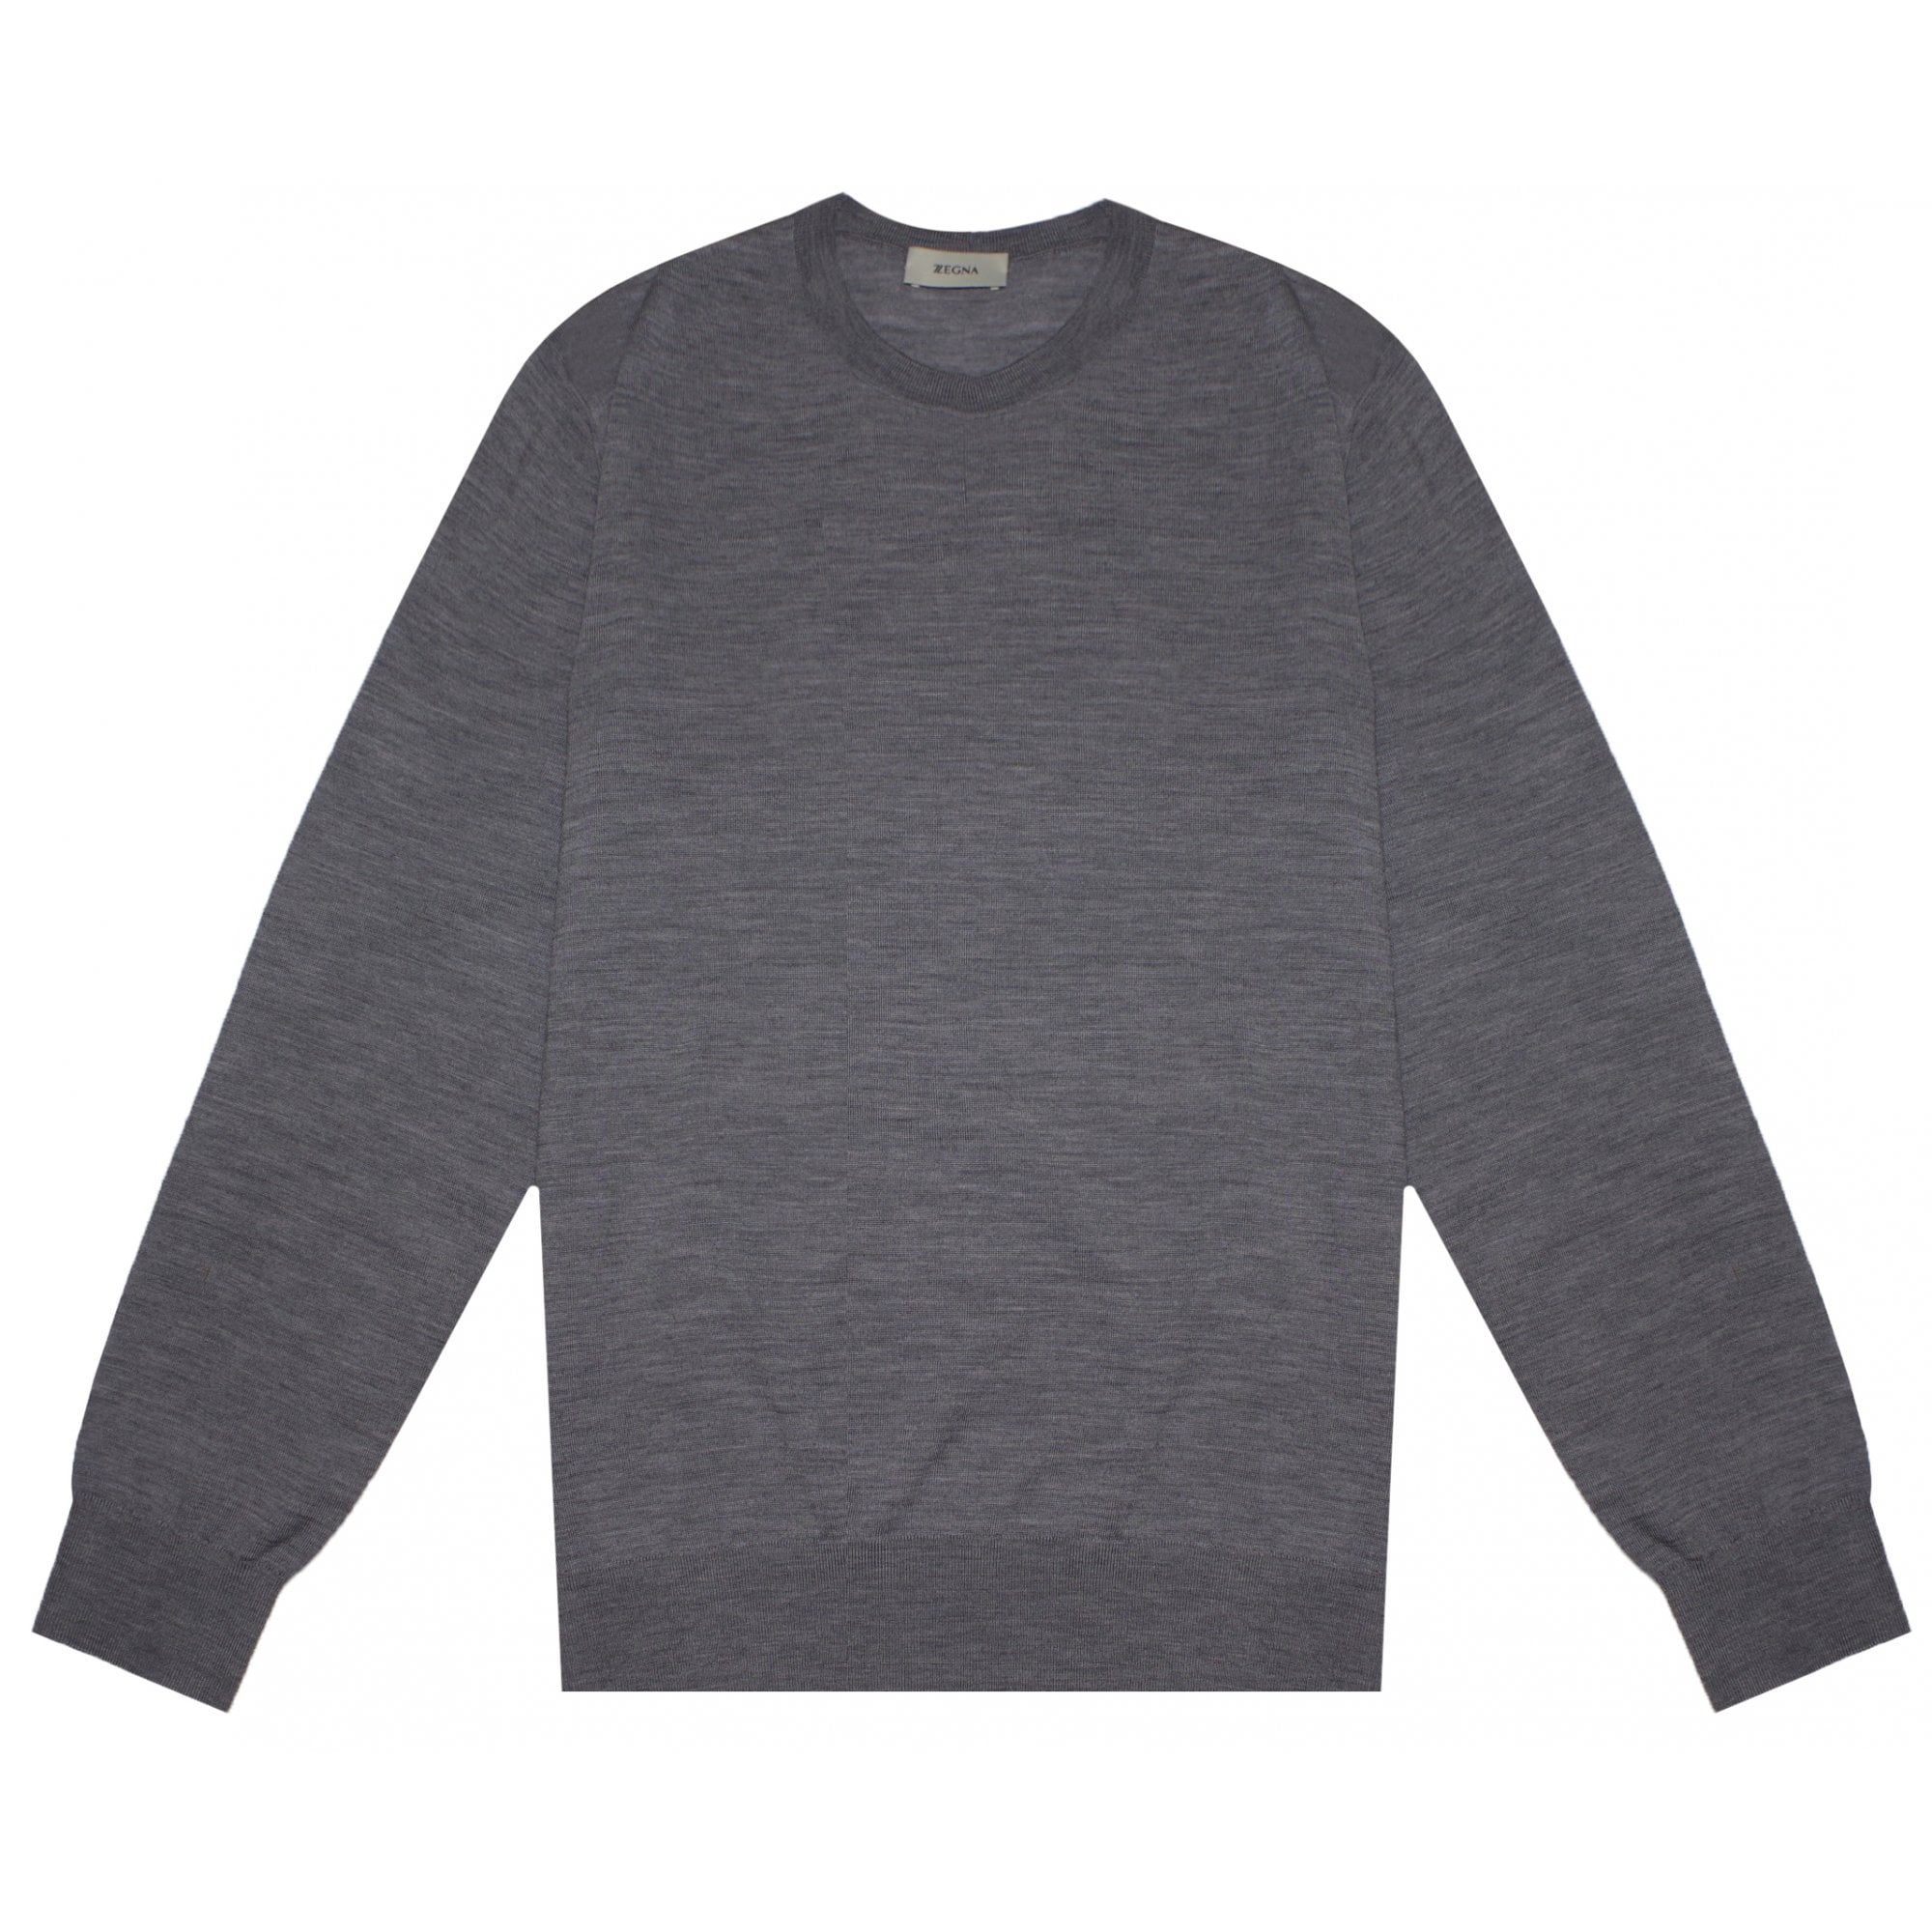 Z Zegna Men's Plain Sweater Grey S